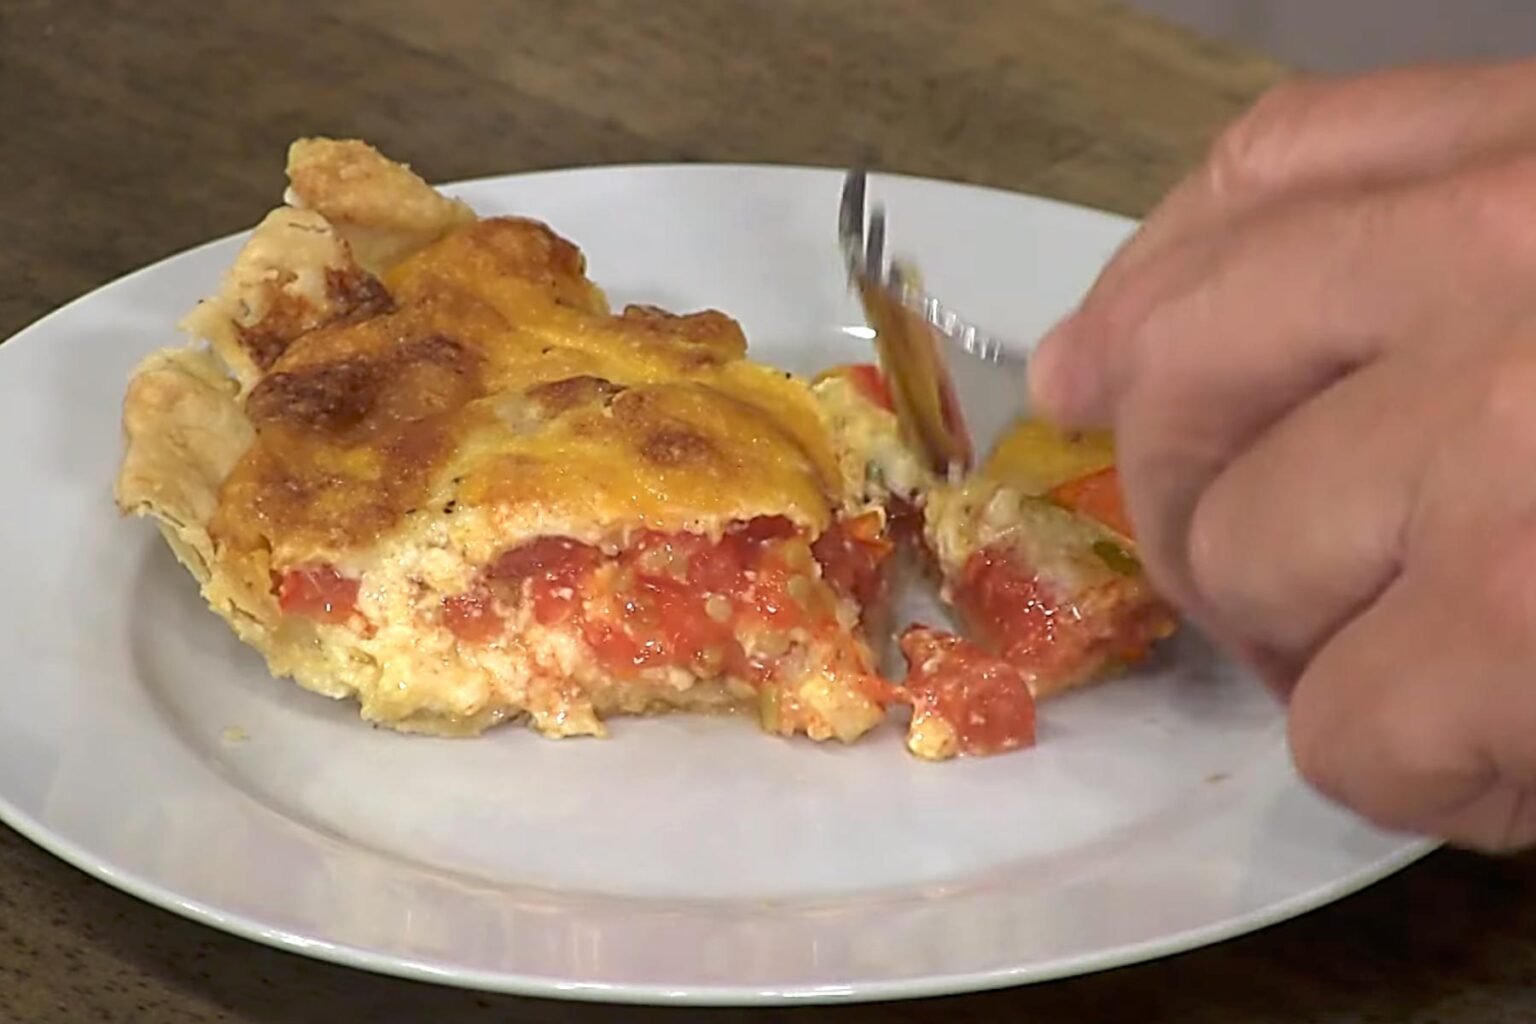 tomato pie slice on plate